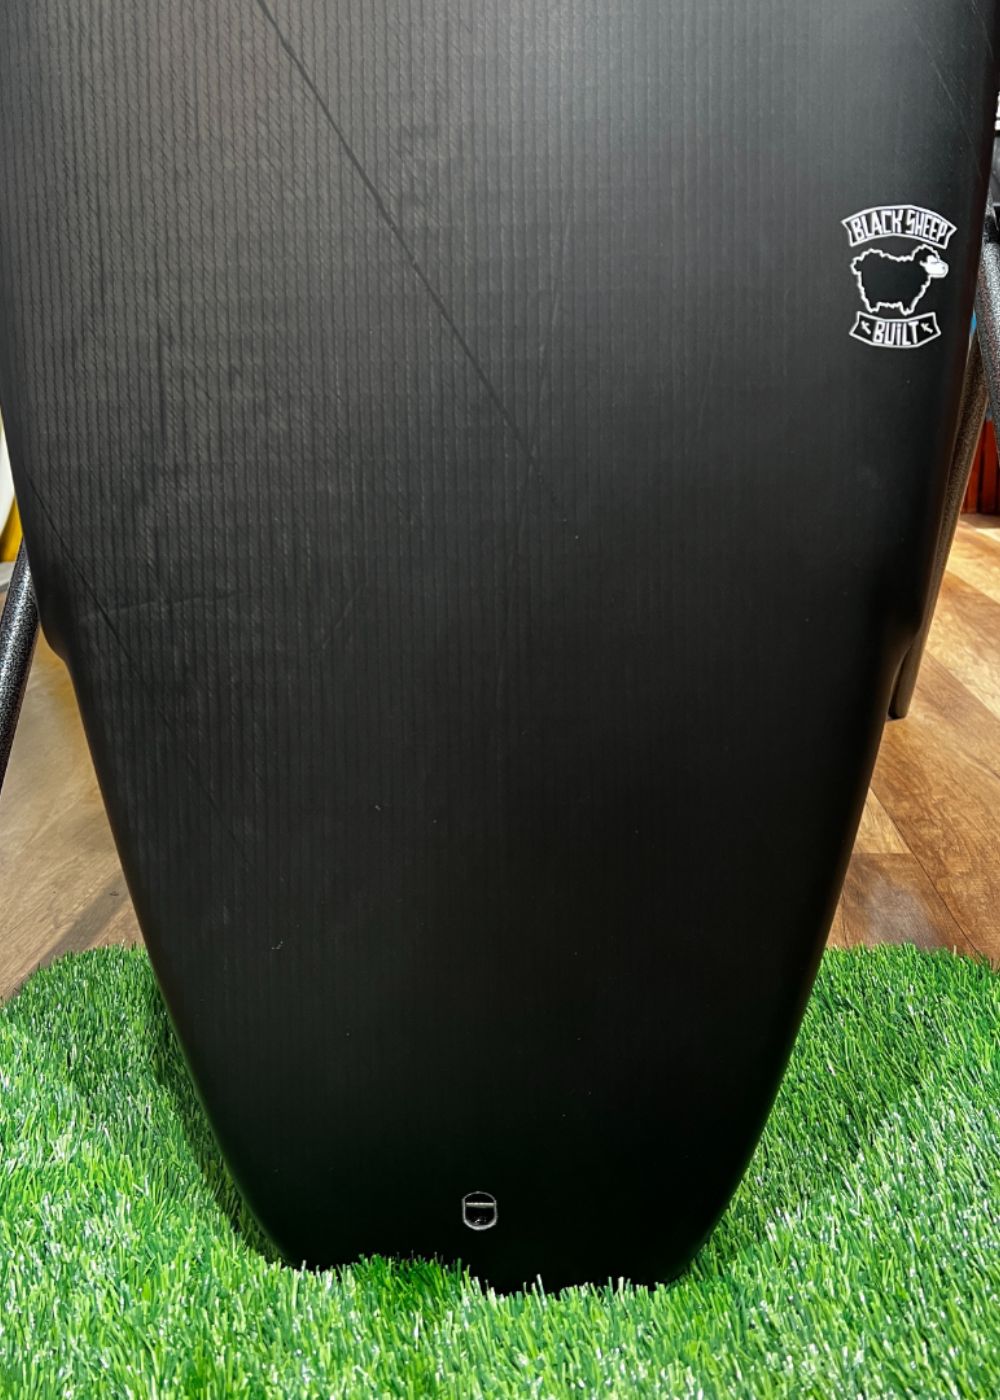 Rad Ripper - Black Sheep Technology lost surfboards 